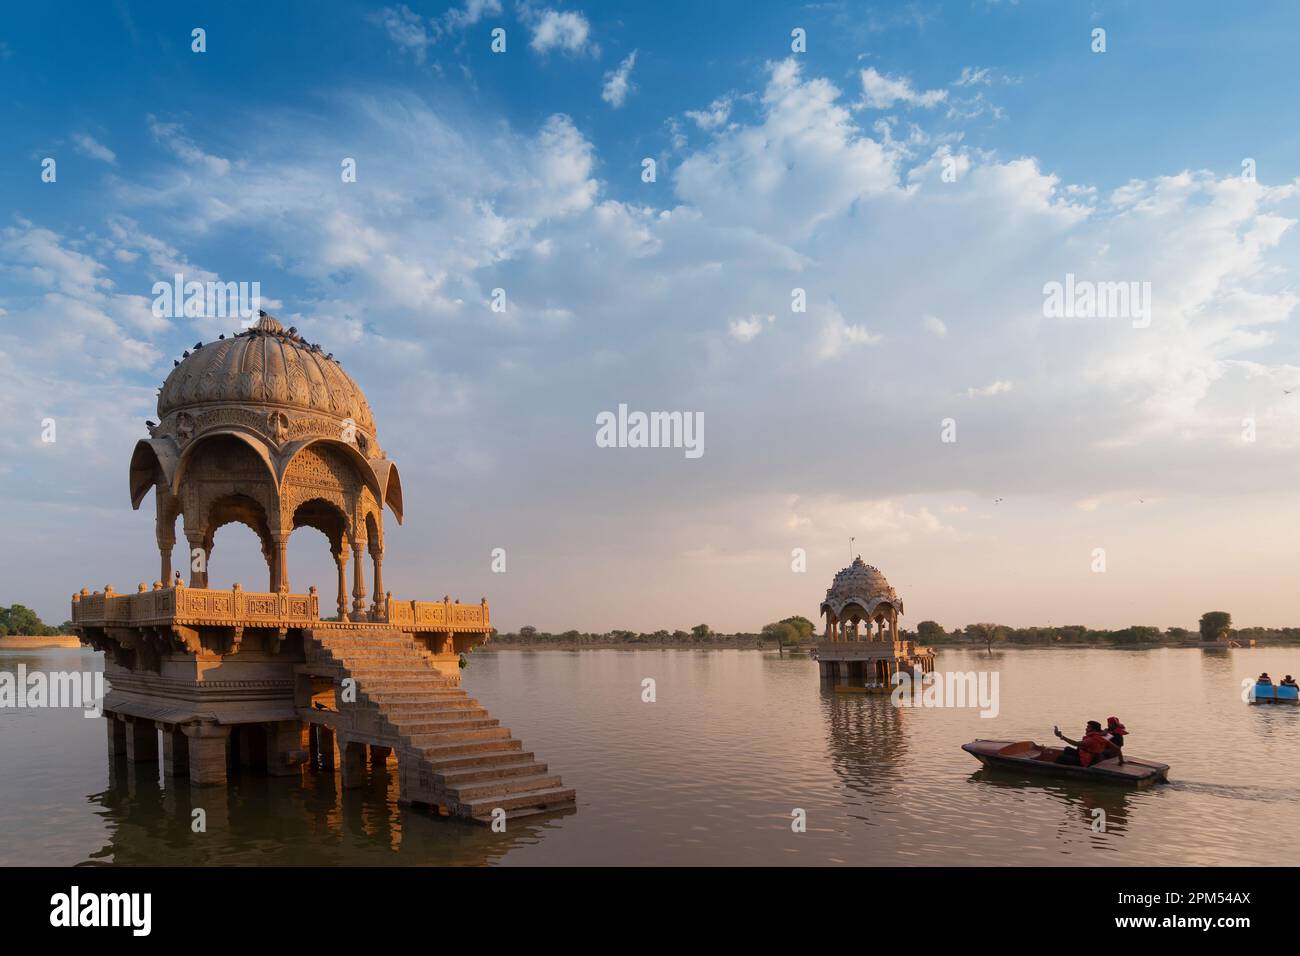 Jaisalmer, Rajasthan, India - 14.10.2019: Chhatris, dome-shaped pavilions on Gadisar or Gadaria lake, Built by King Rawal Jaisal,rebuilt by Gadsi Sing. Stock Photo